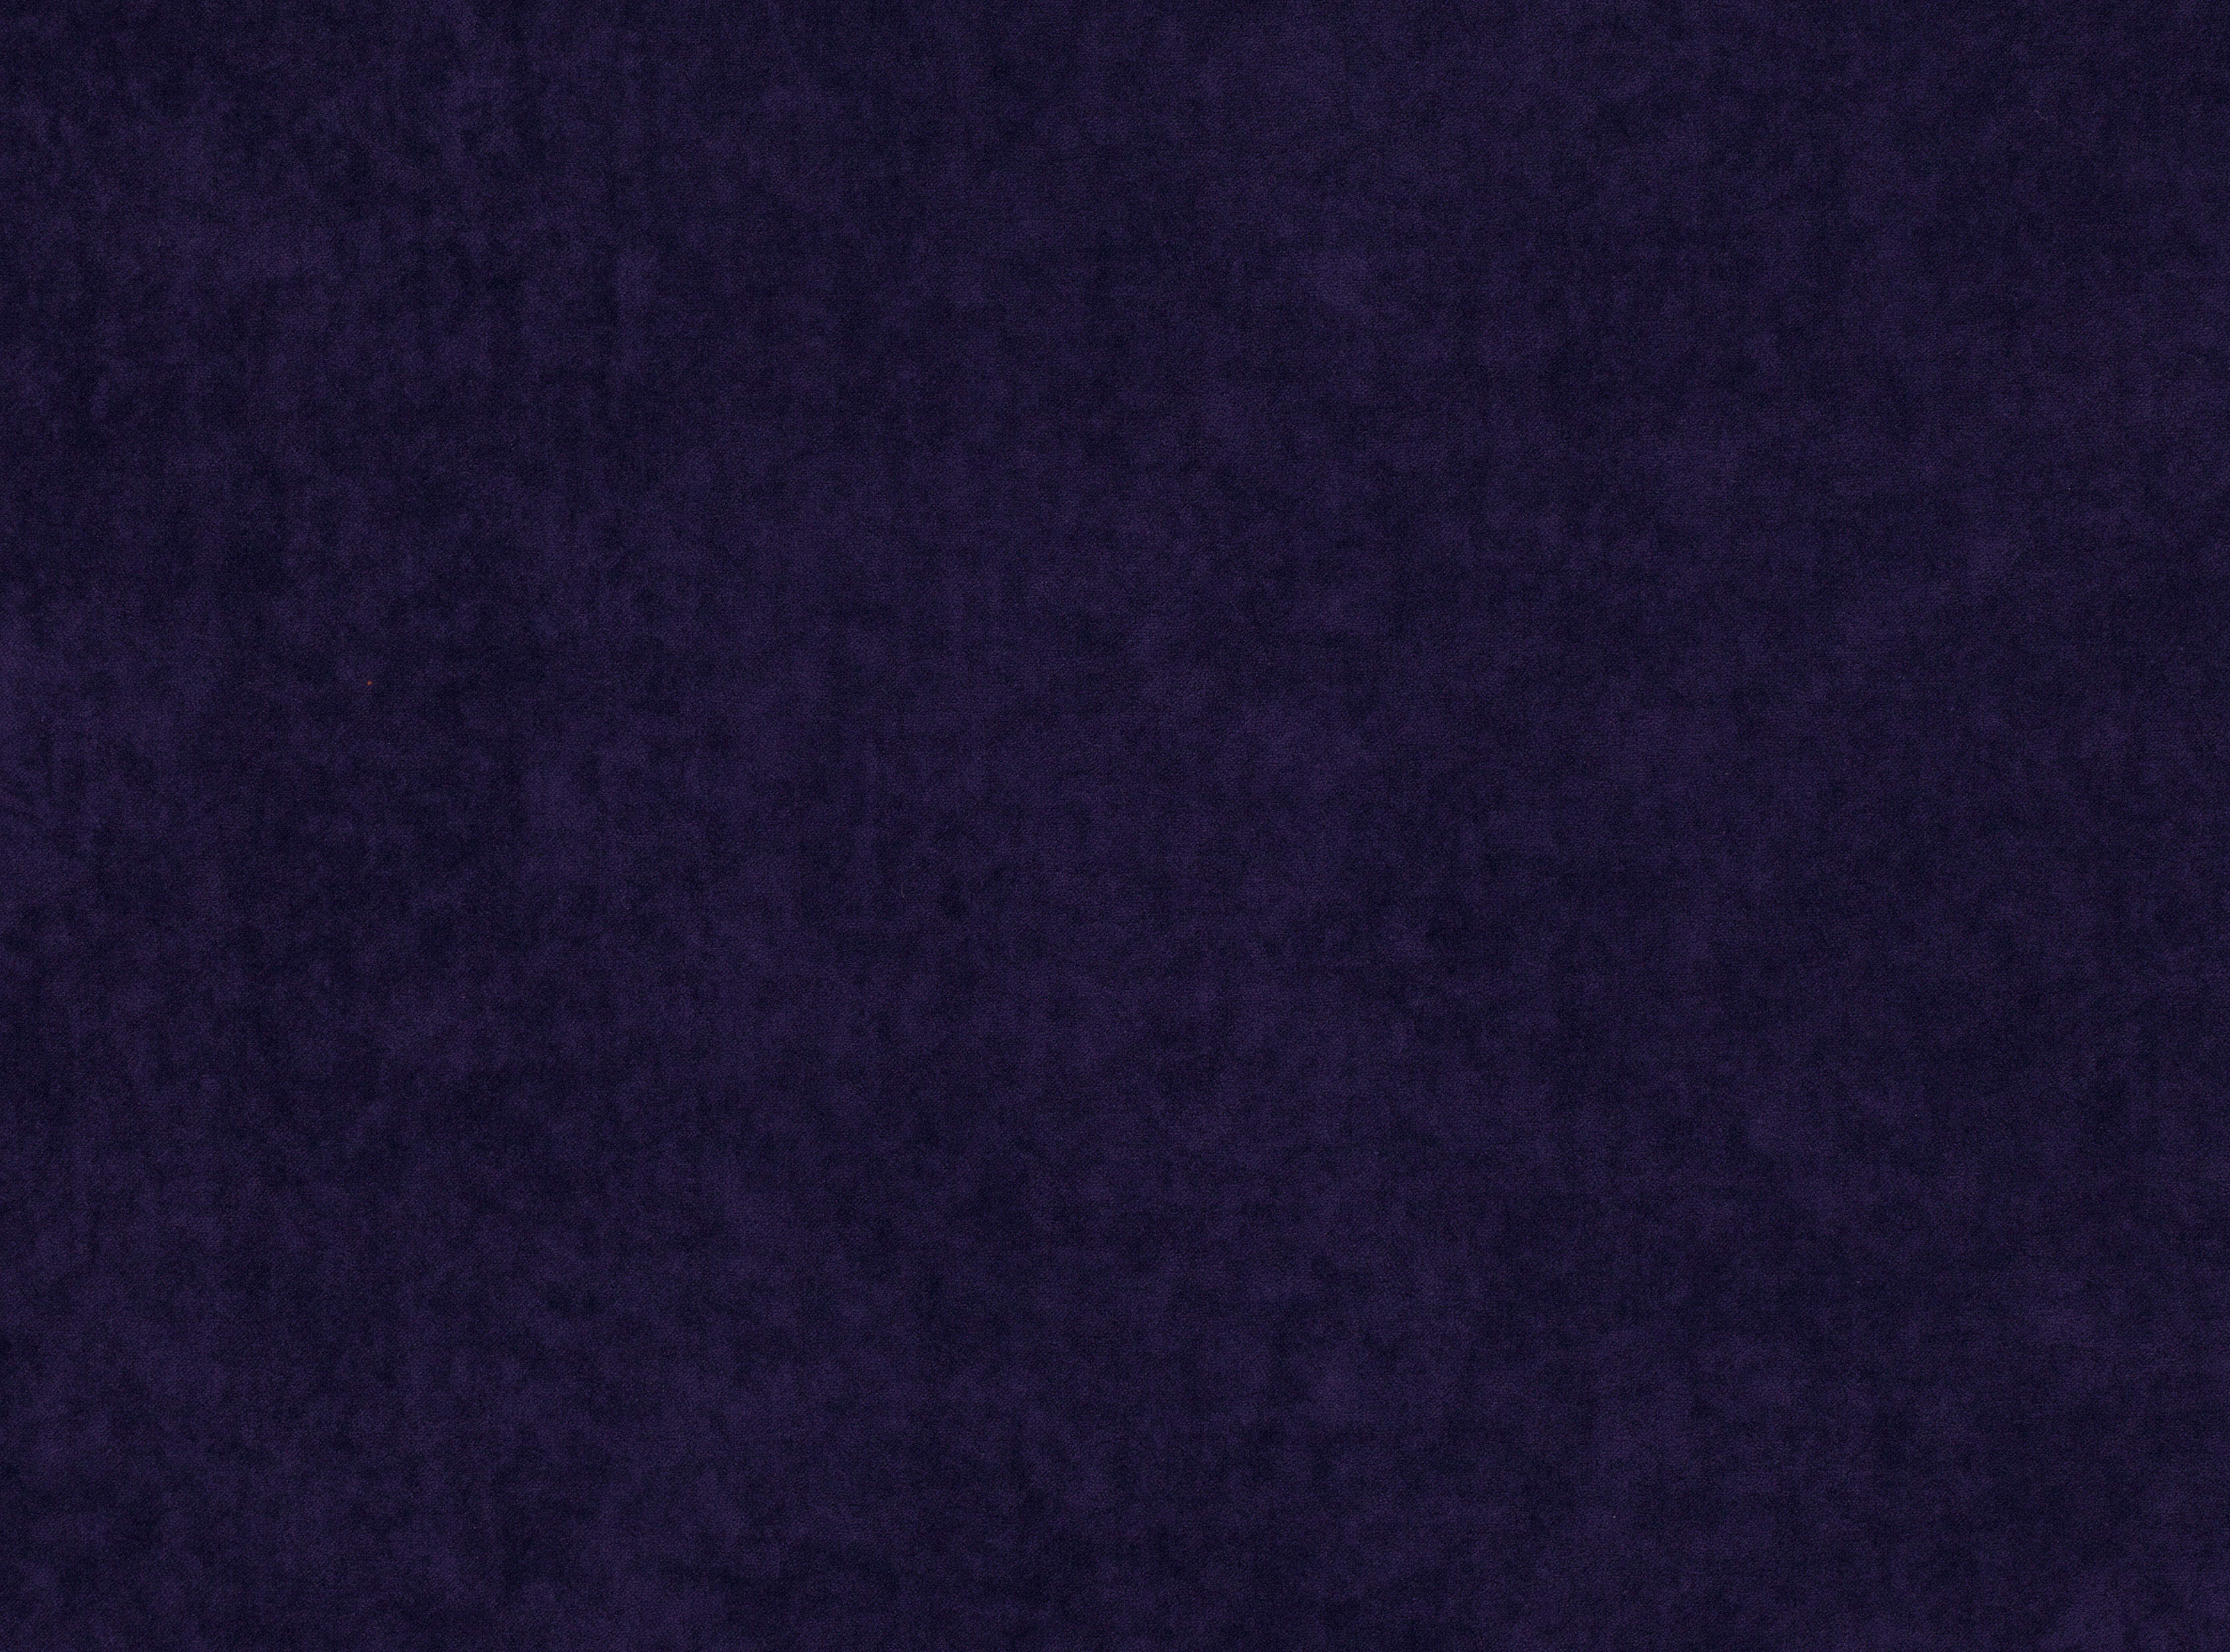 KIRKBY DESIGN Crush 2 Midnight purple K5033/109